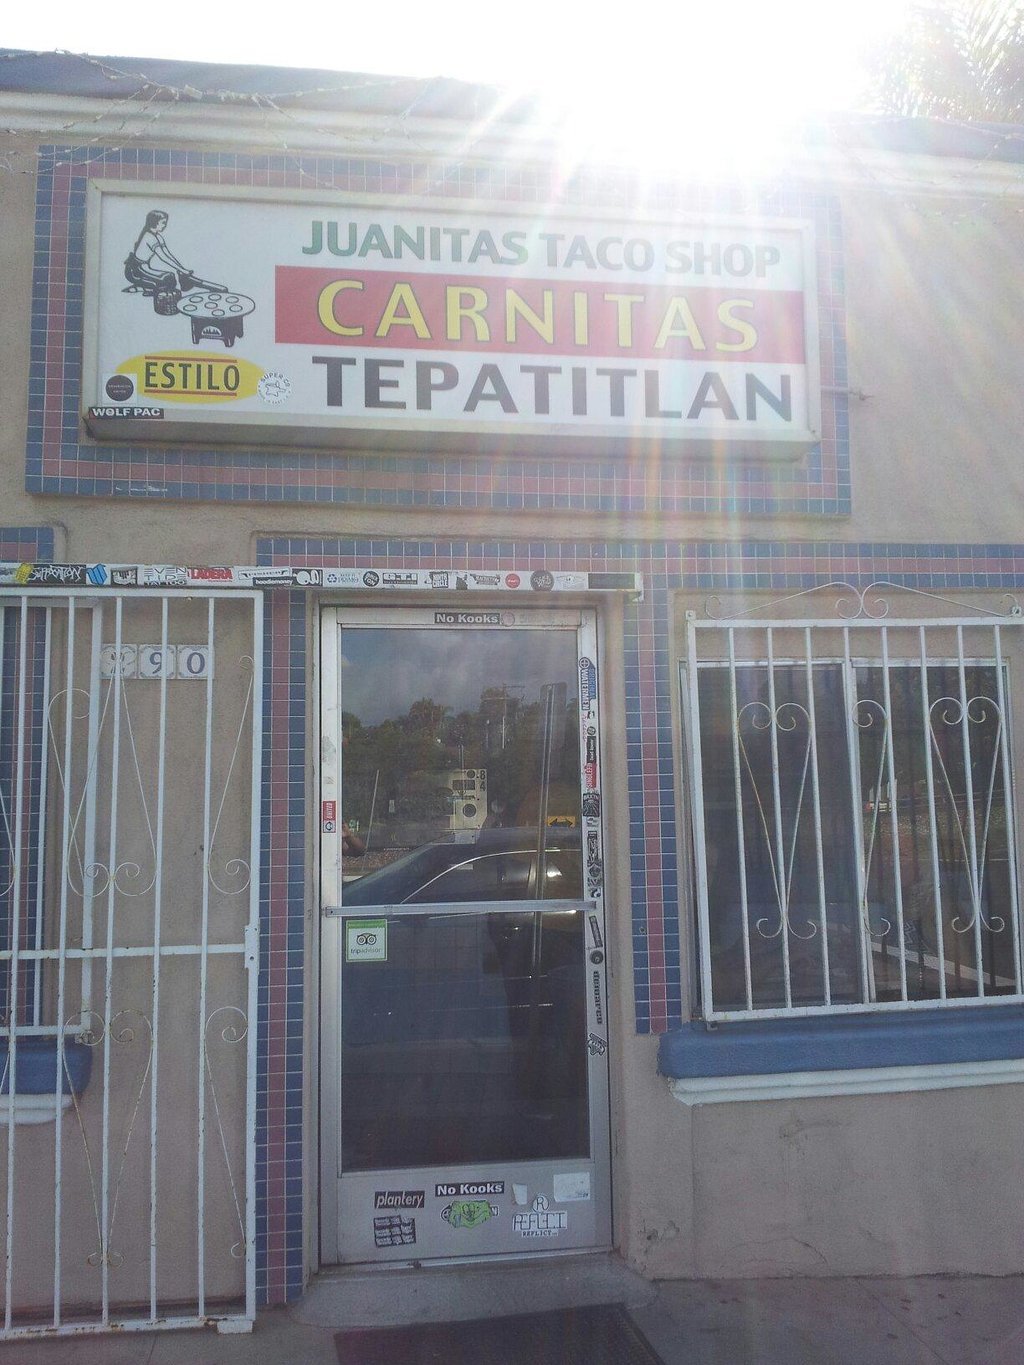 Juanitas Taco Shop